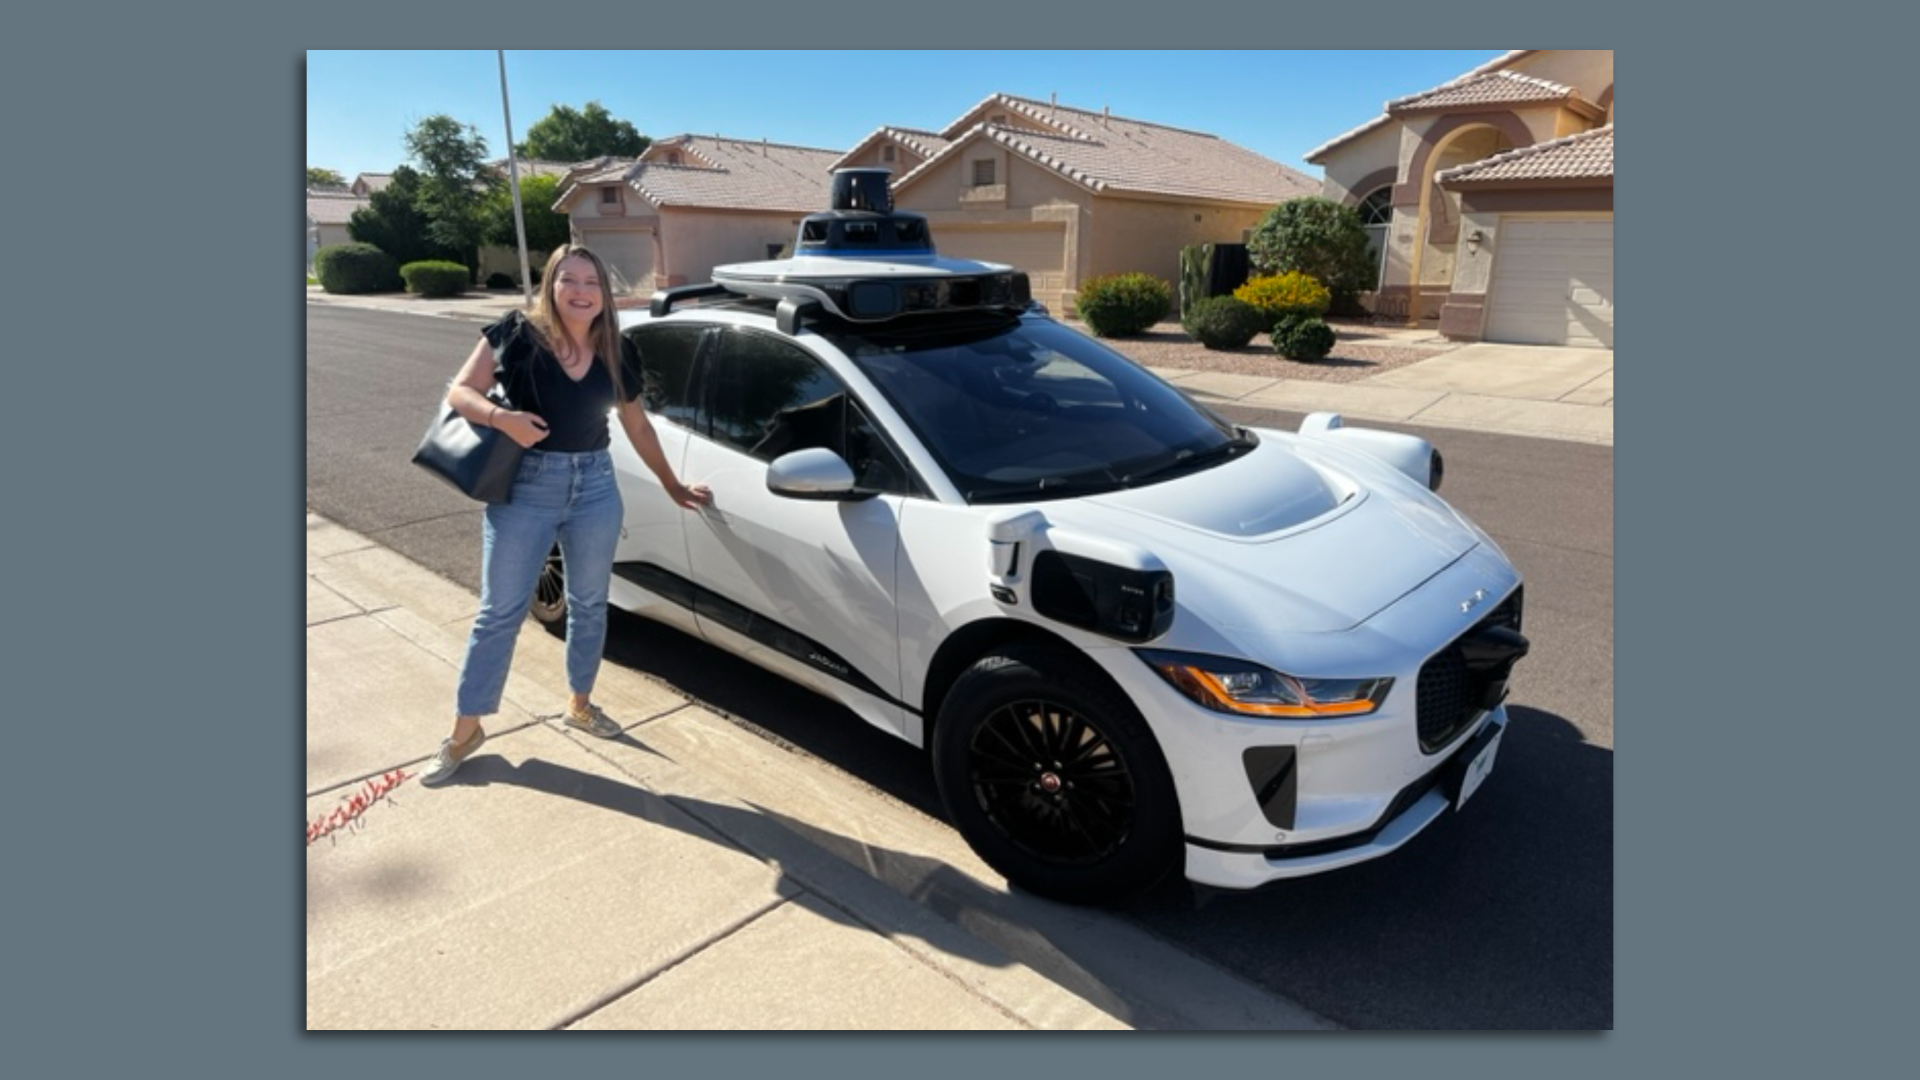 Jessica and a Waymo driverless car.